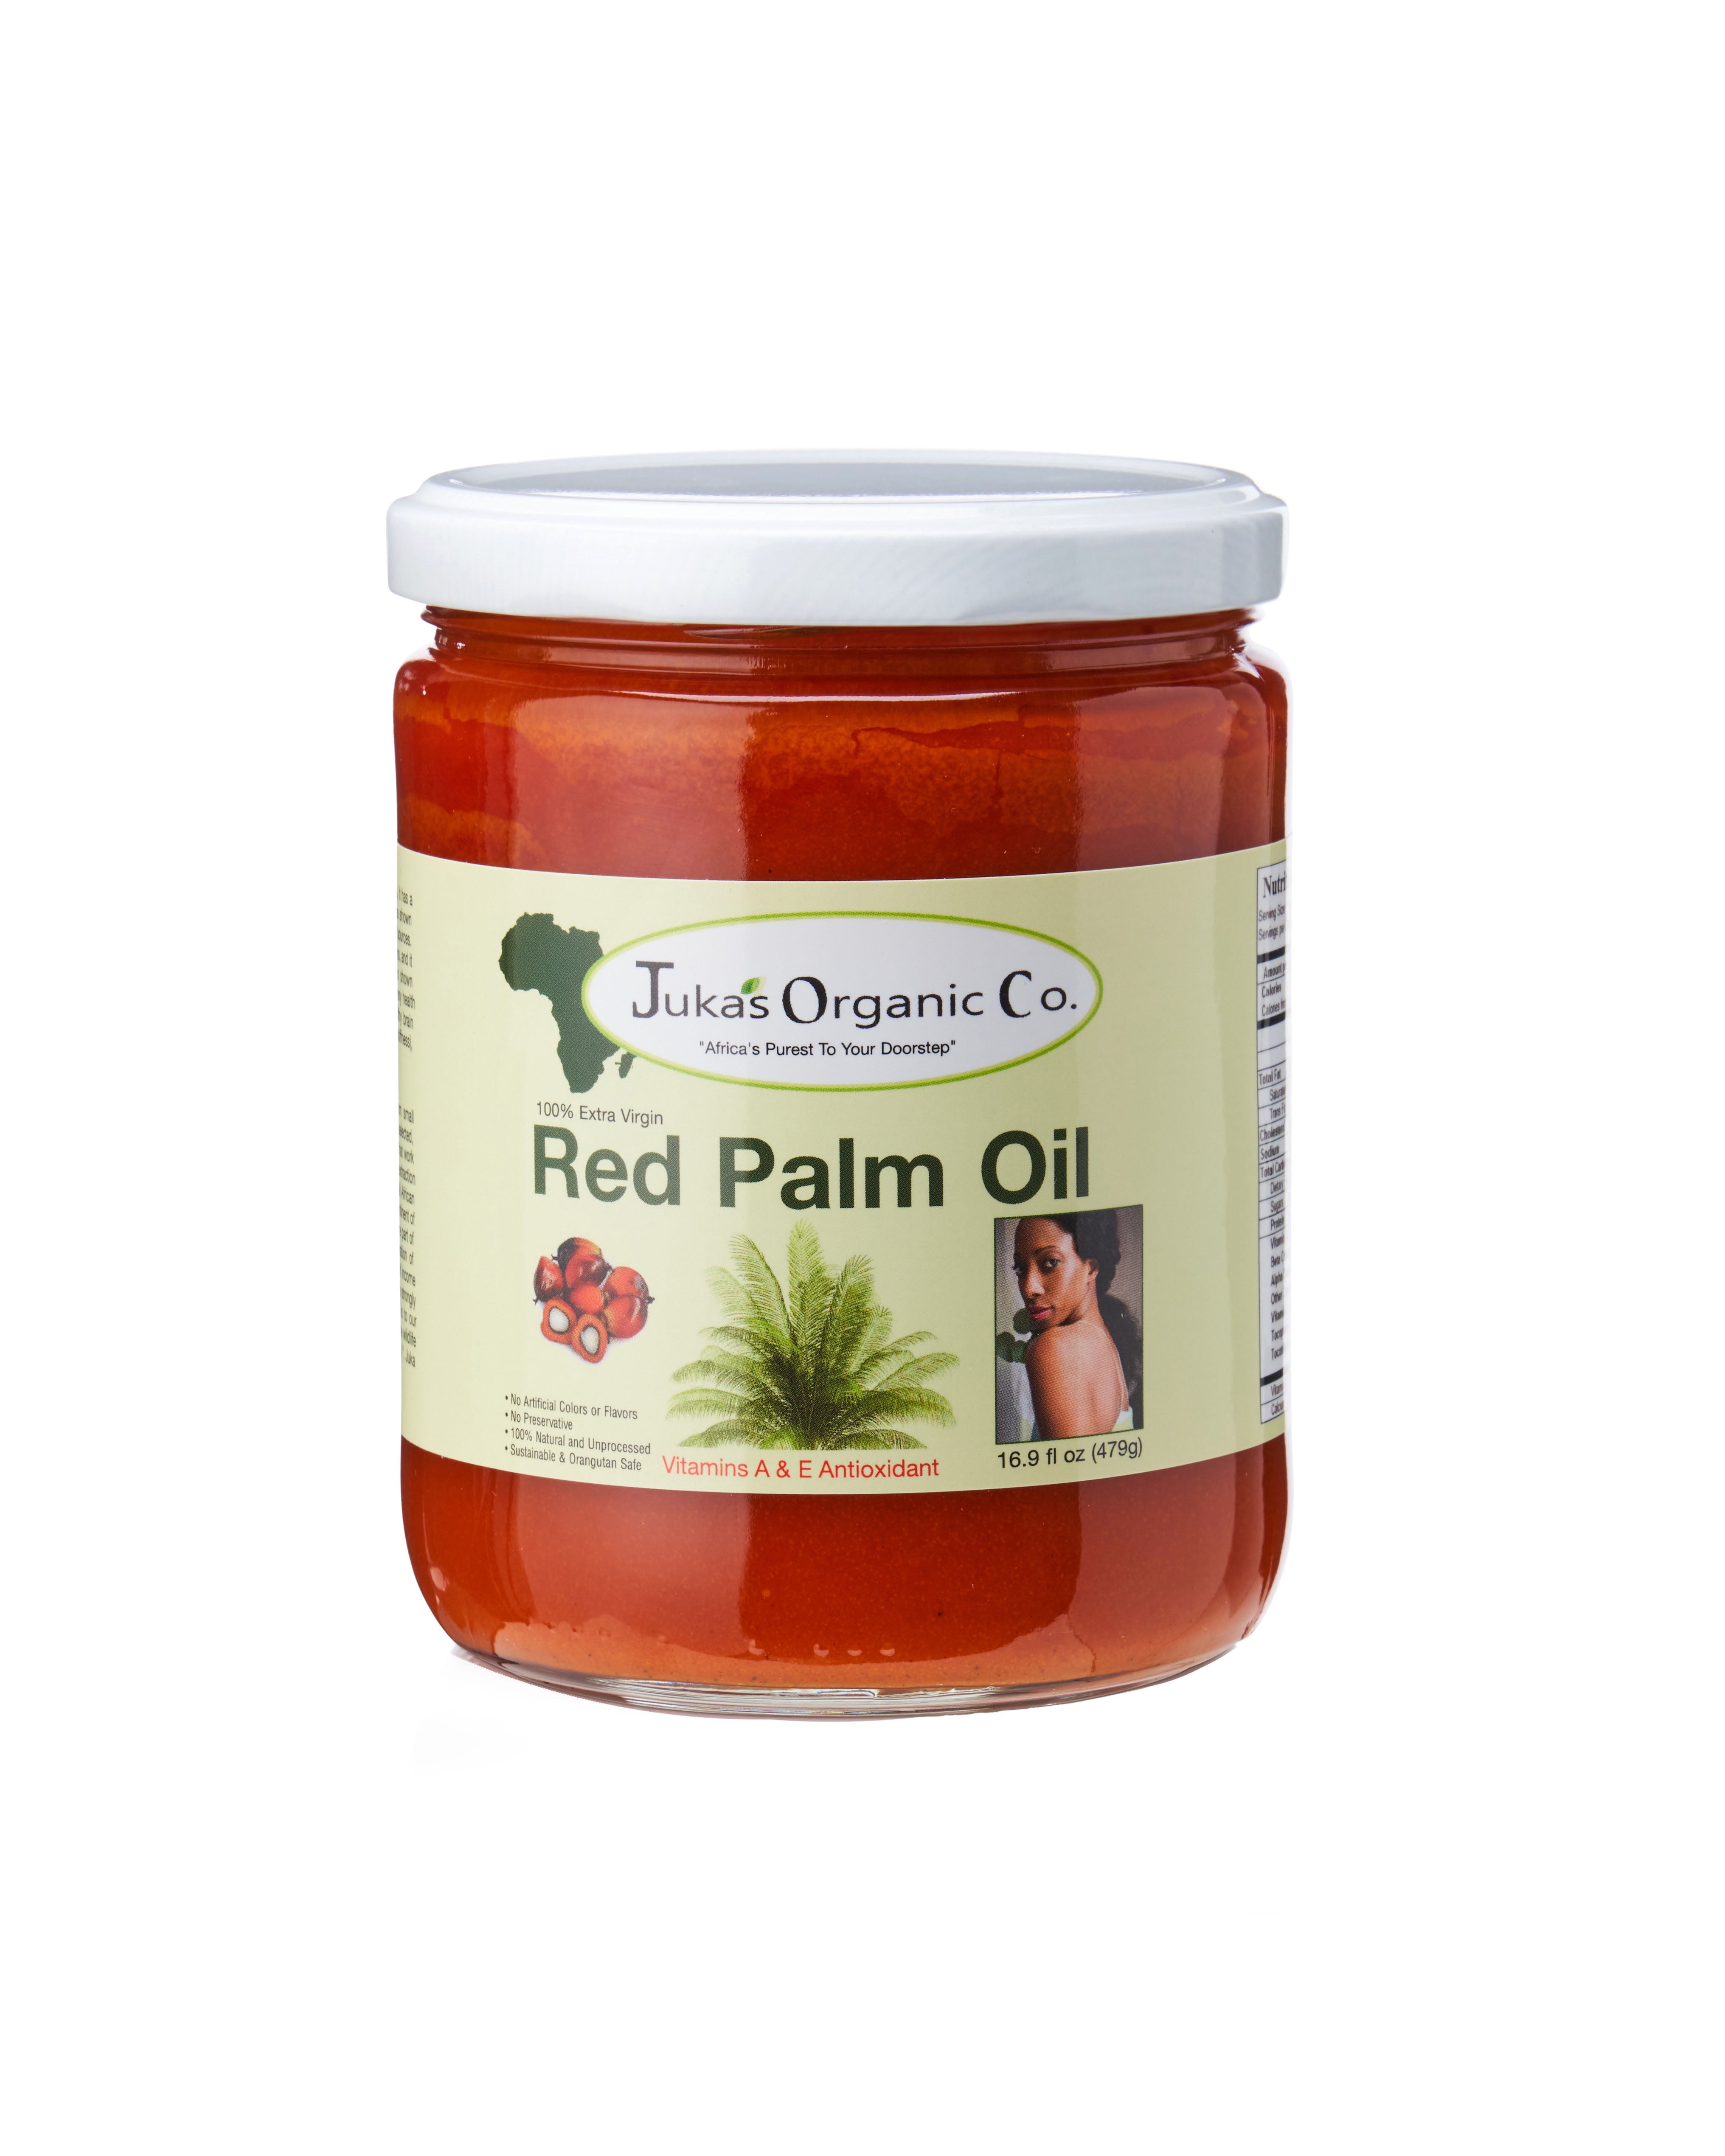 Jukas Organic Co. Red Palm Oil 1/2 Liter - 16oz